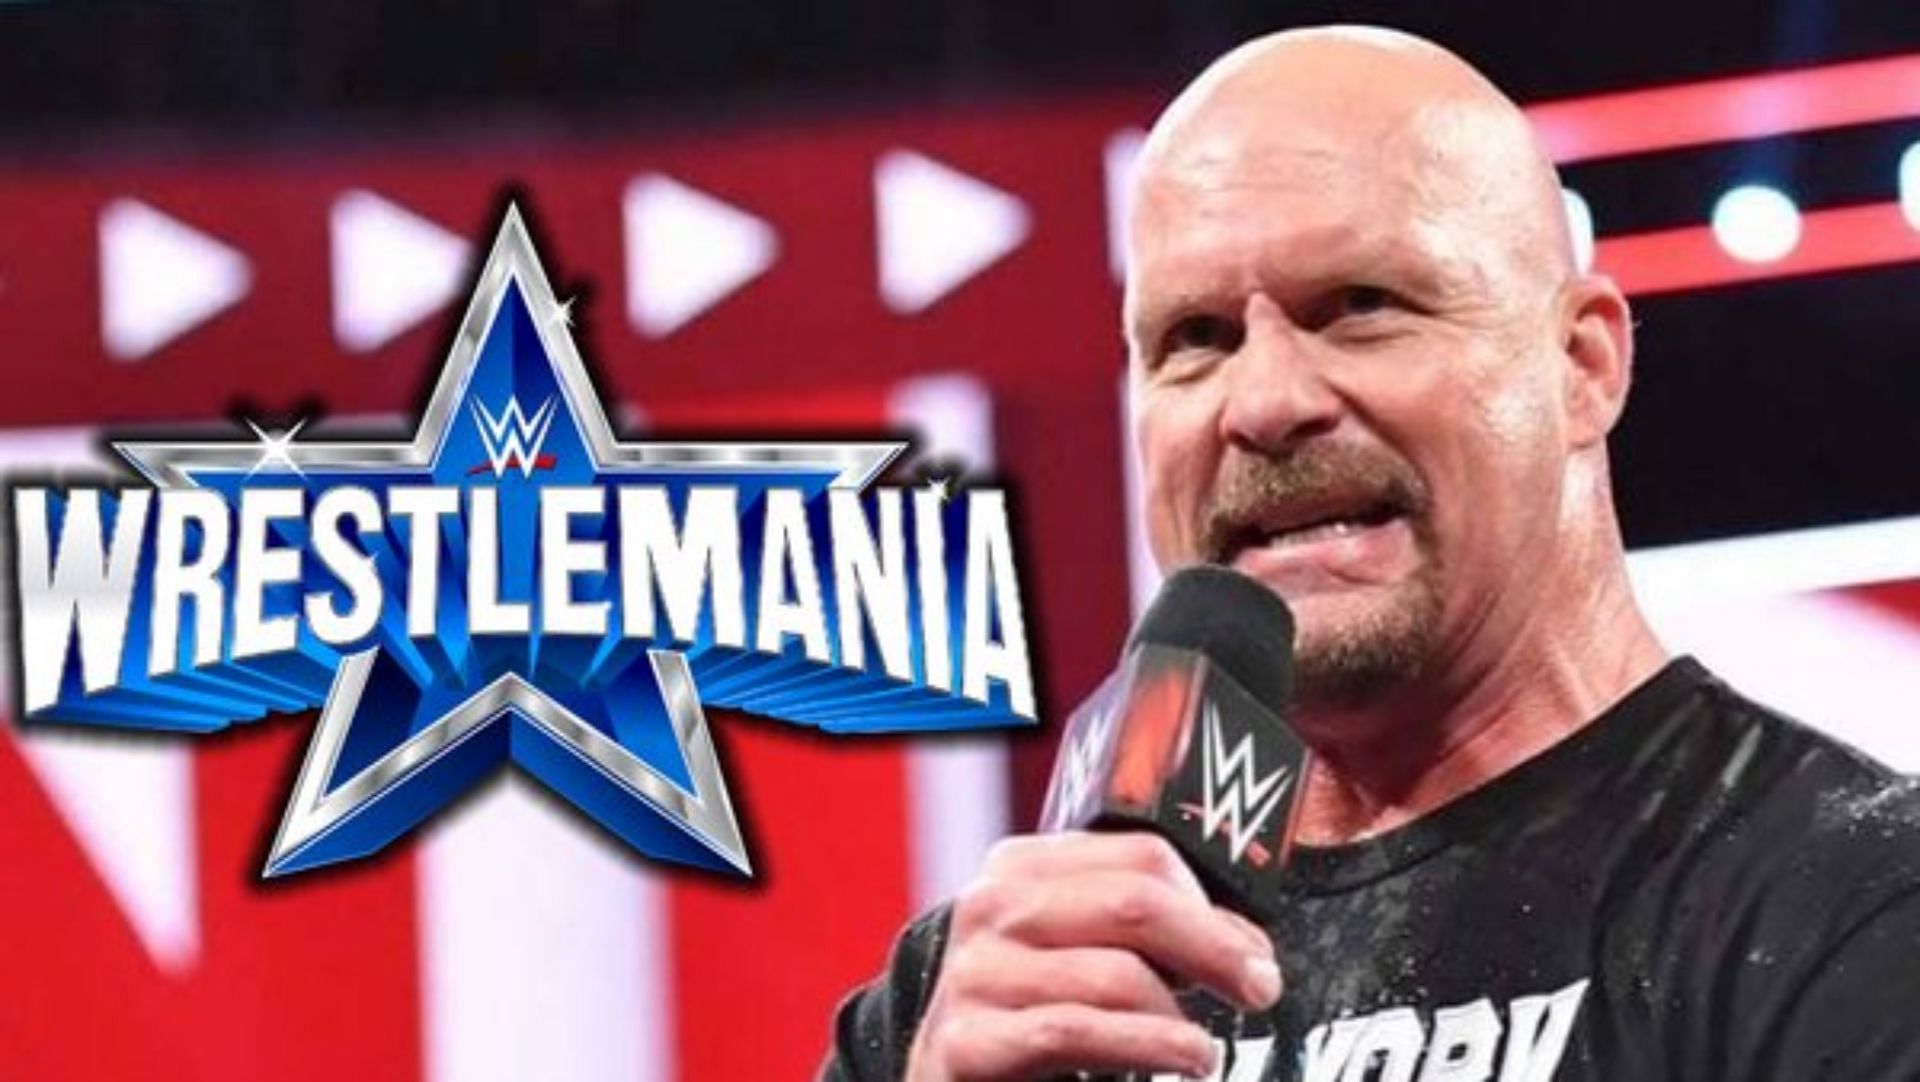 Stone Cold Steve Austin will make his WWE return at WrestleMania 38.